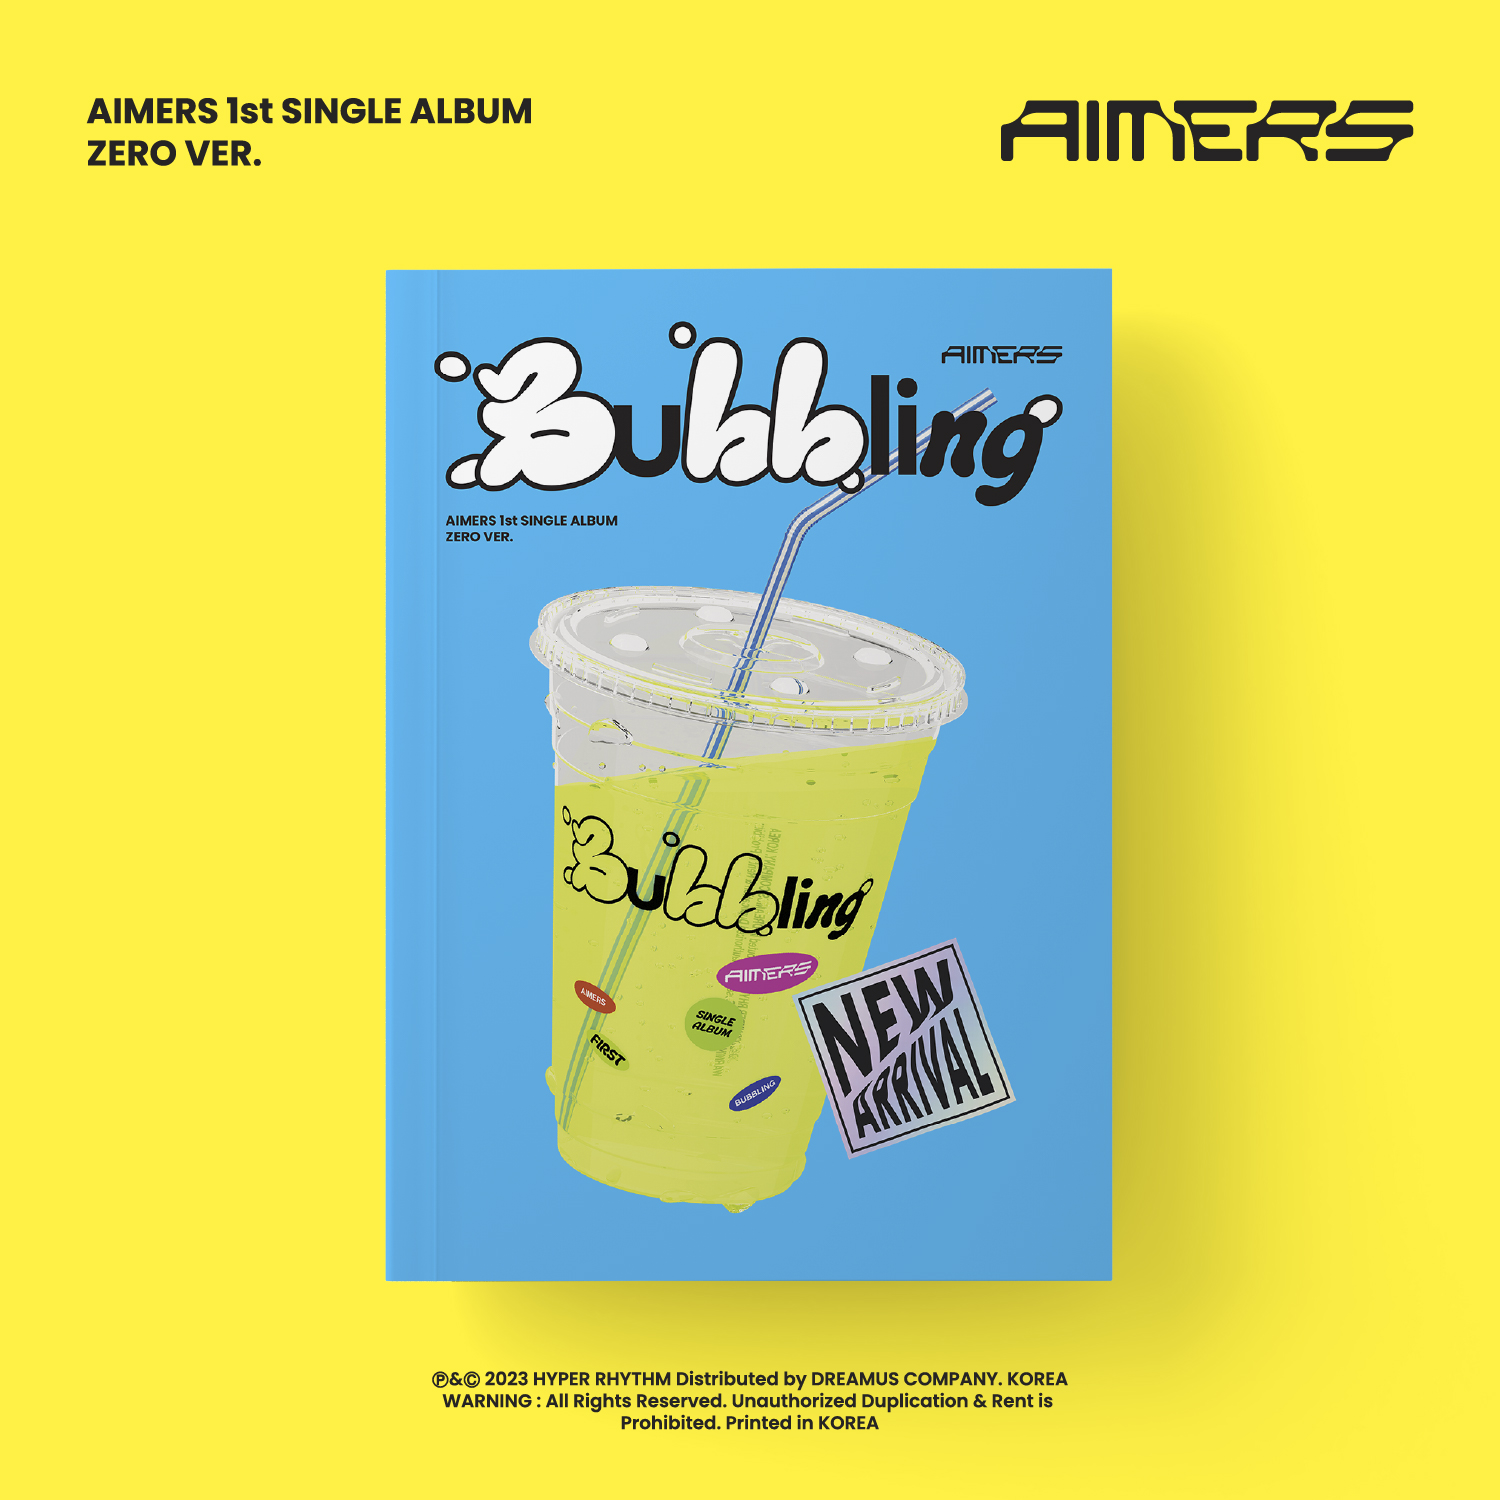 [全款 裸专] AIMERS - 单曲1辑 [Bubbling] (ZERO Ver.)_AIMERS中粉联合